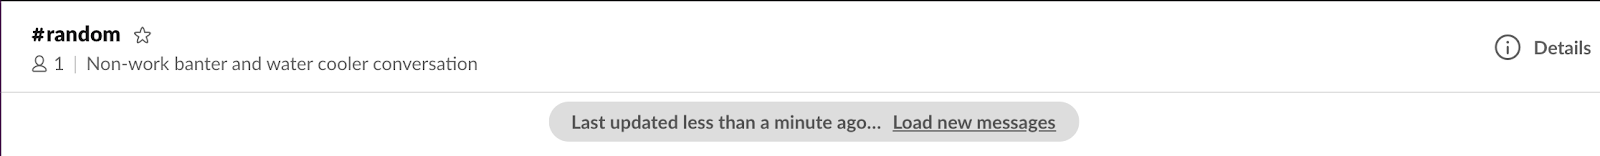 Slack 頻道中顯示訊息，提示「上次更新時間為不到 1 分鐘前……載入新訊息」